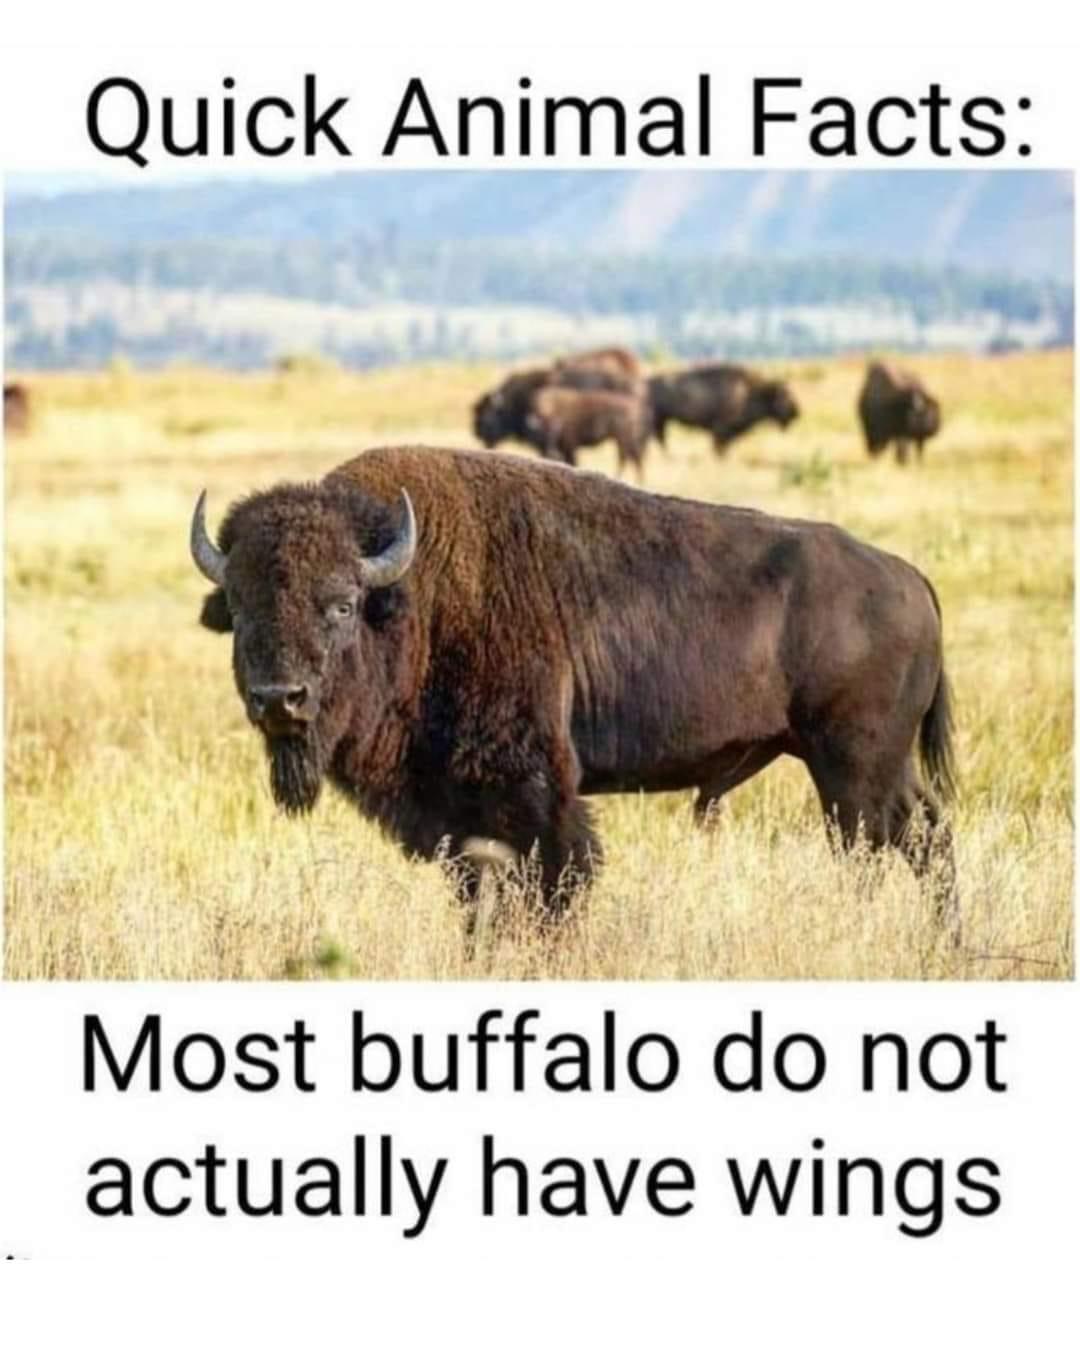 Buffalo Wings | Public Domain